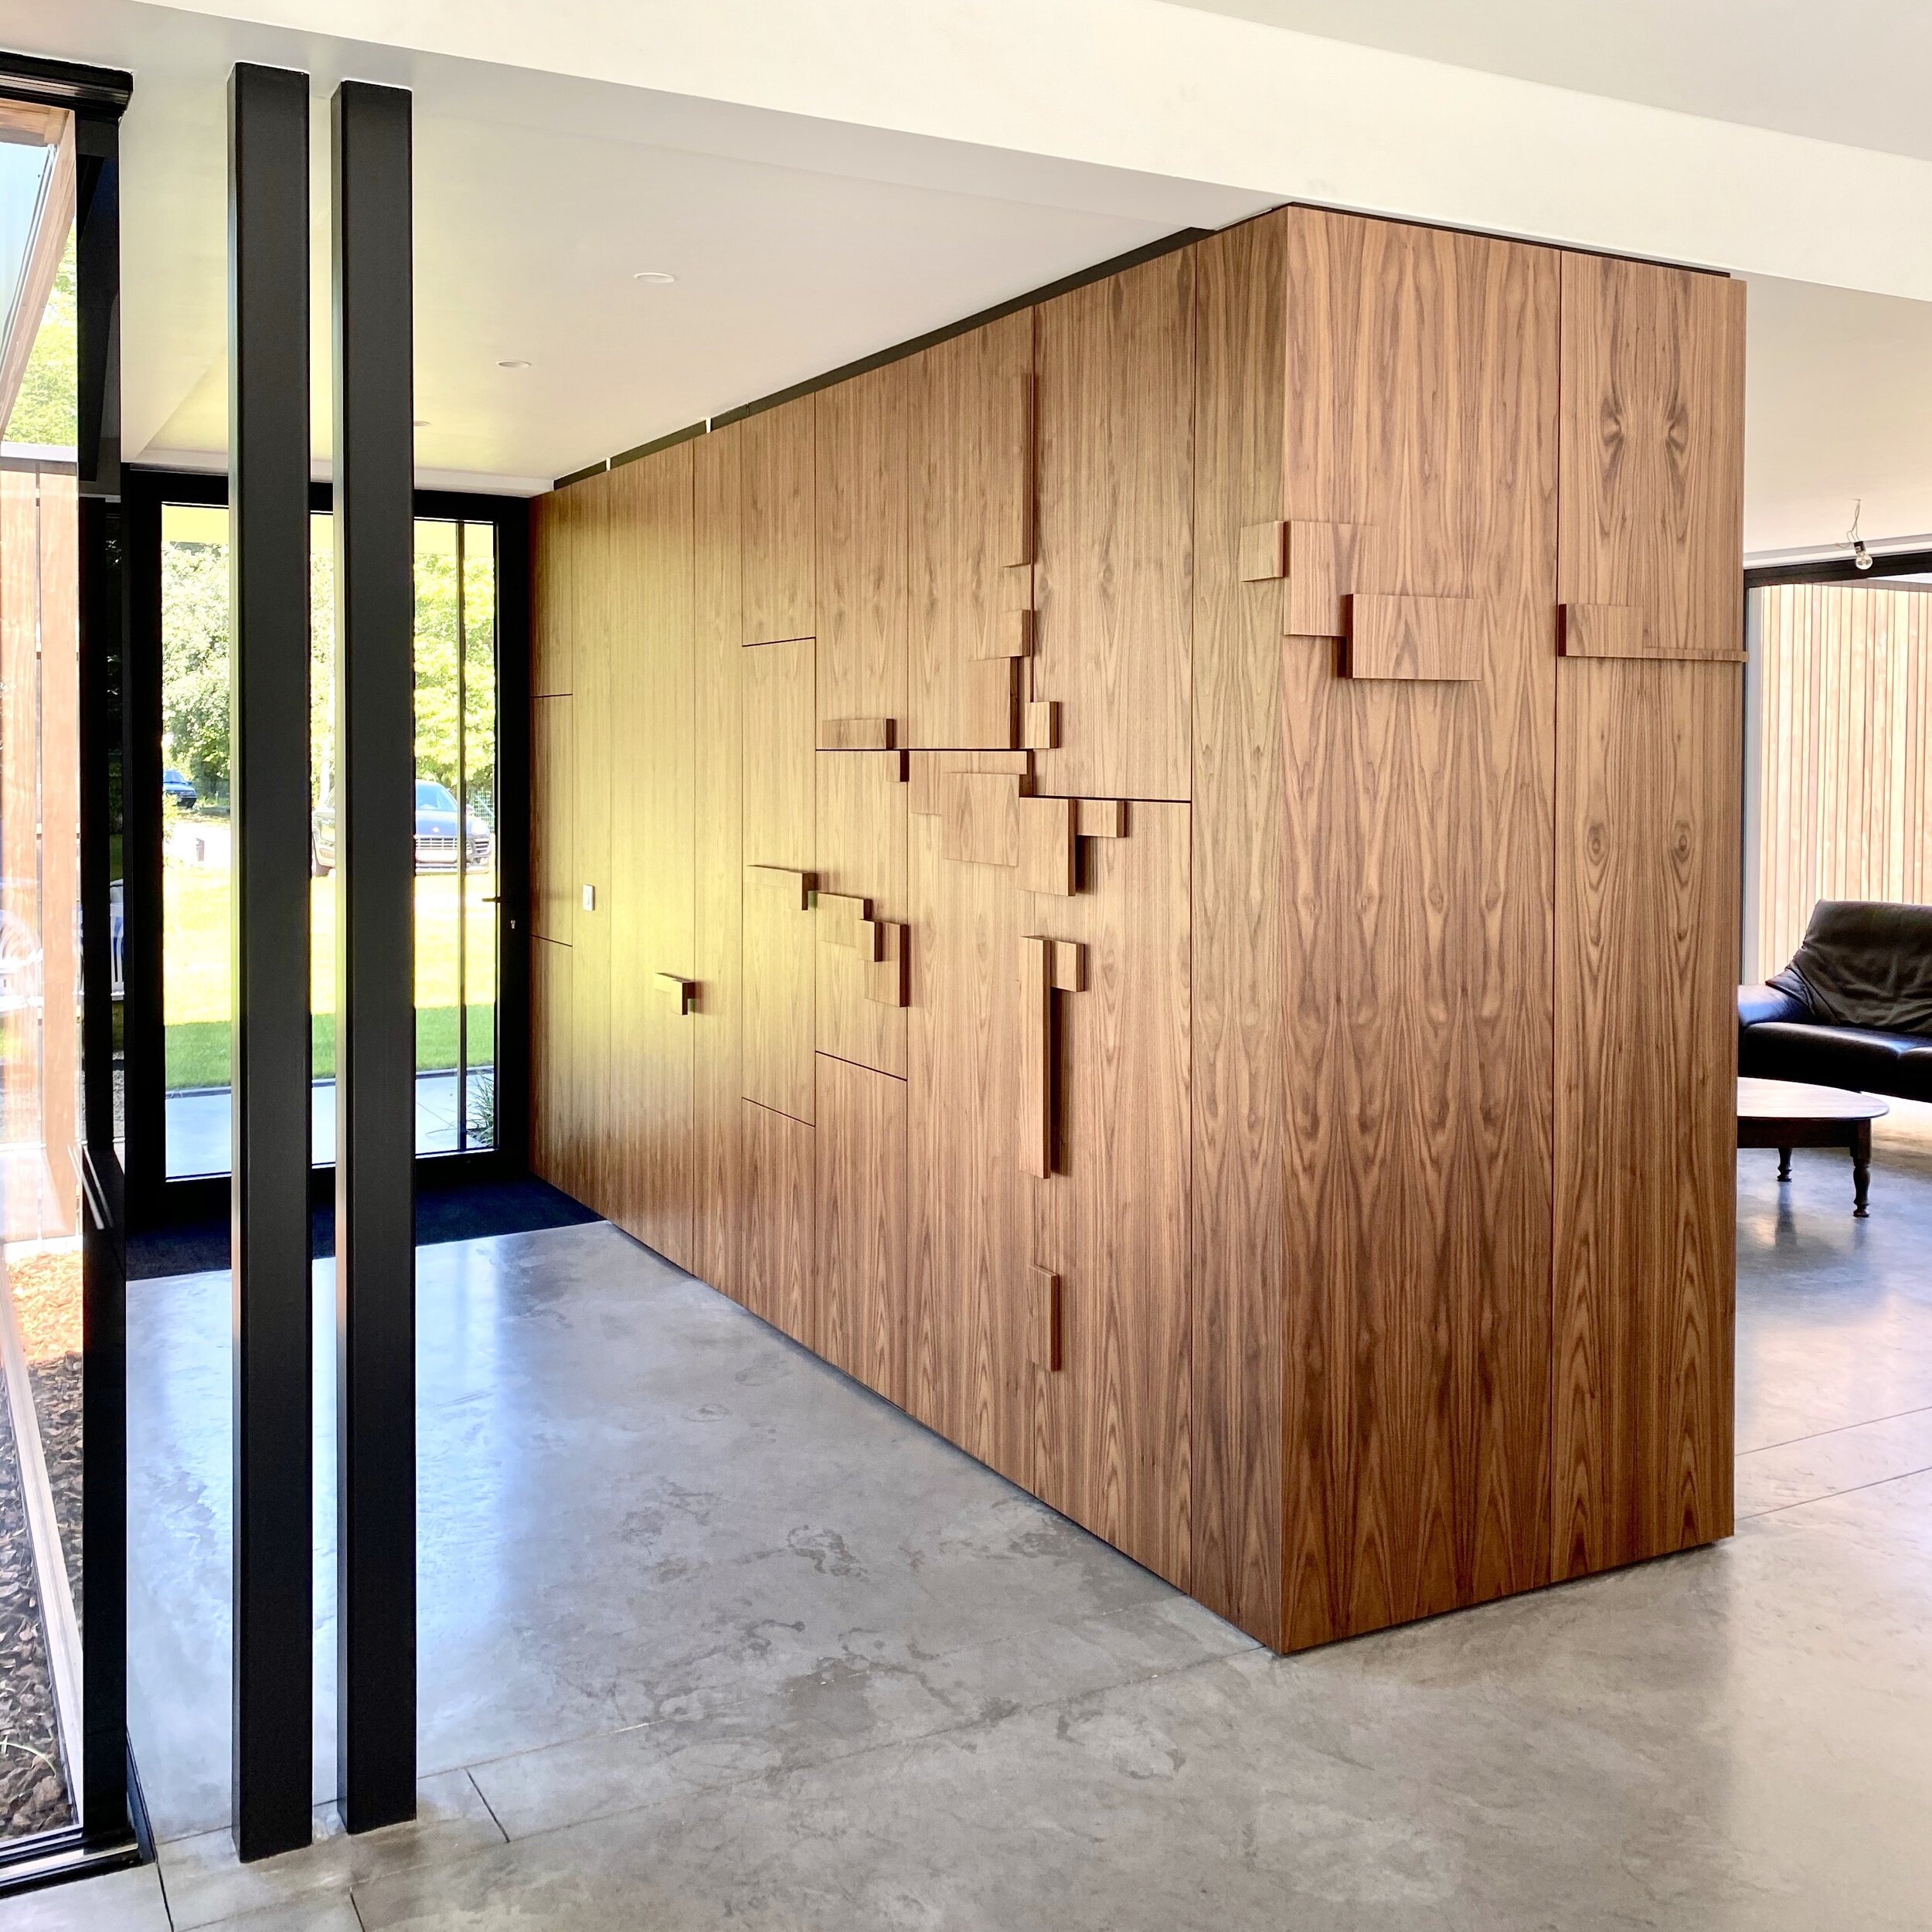 Kapellen Vestiaire cabinet design by Filip Janssens 2019 2.jpeg